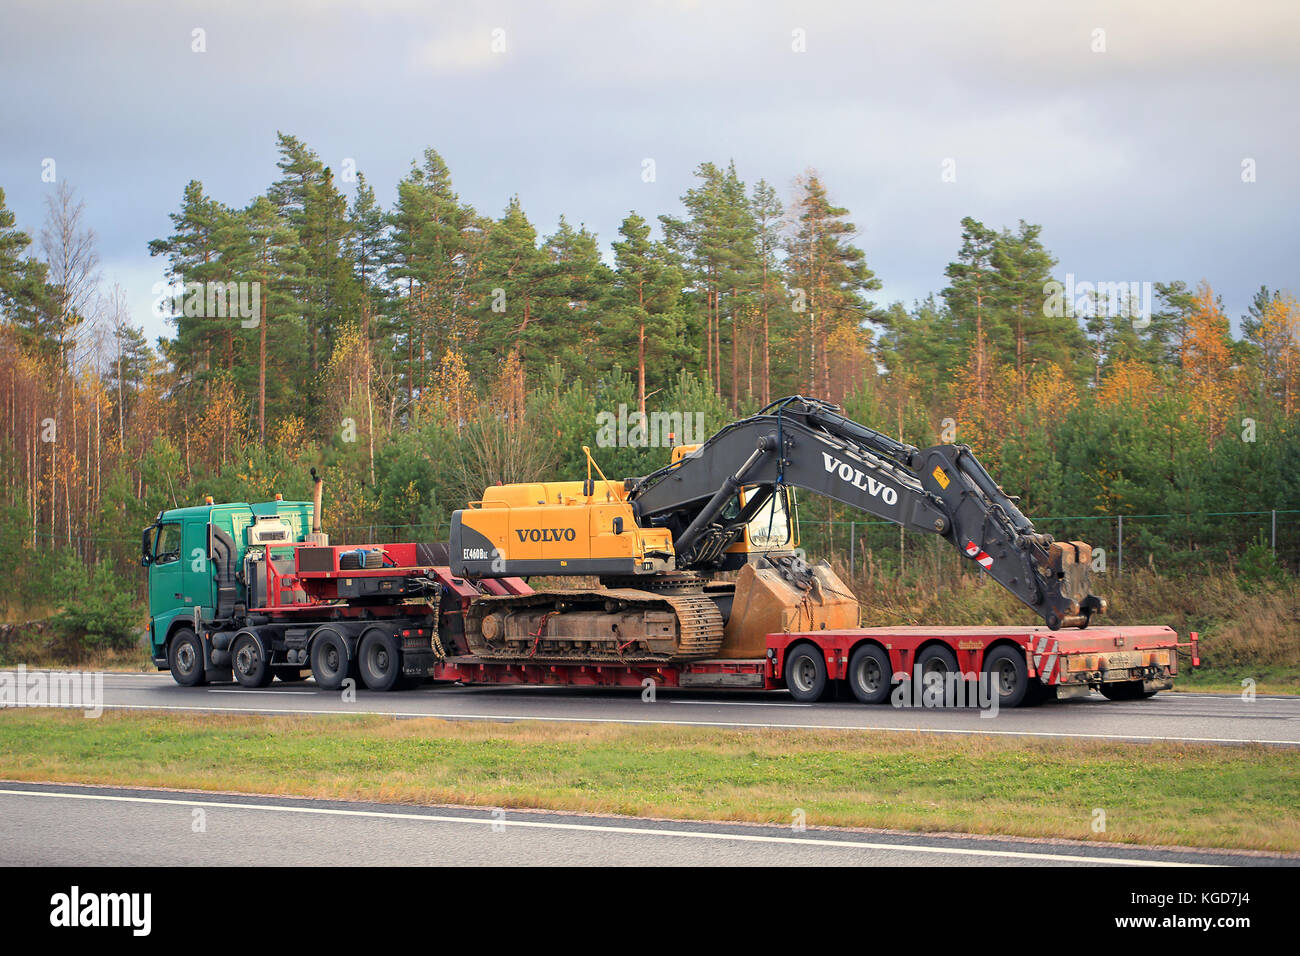 PAIMIO, FINLAND - OCTOBER 23, 2015: Volvo FH truck hauls Volvo EC460 BLC hydraulic crawler excavator. The excavator weighs 46 tonnes. Stock Photo